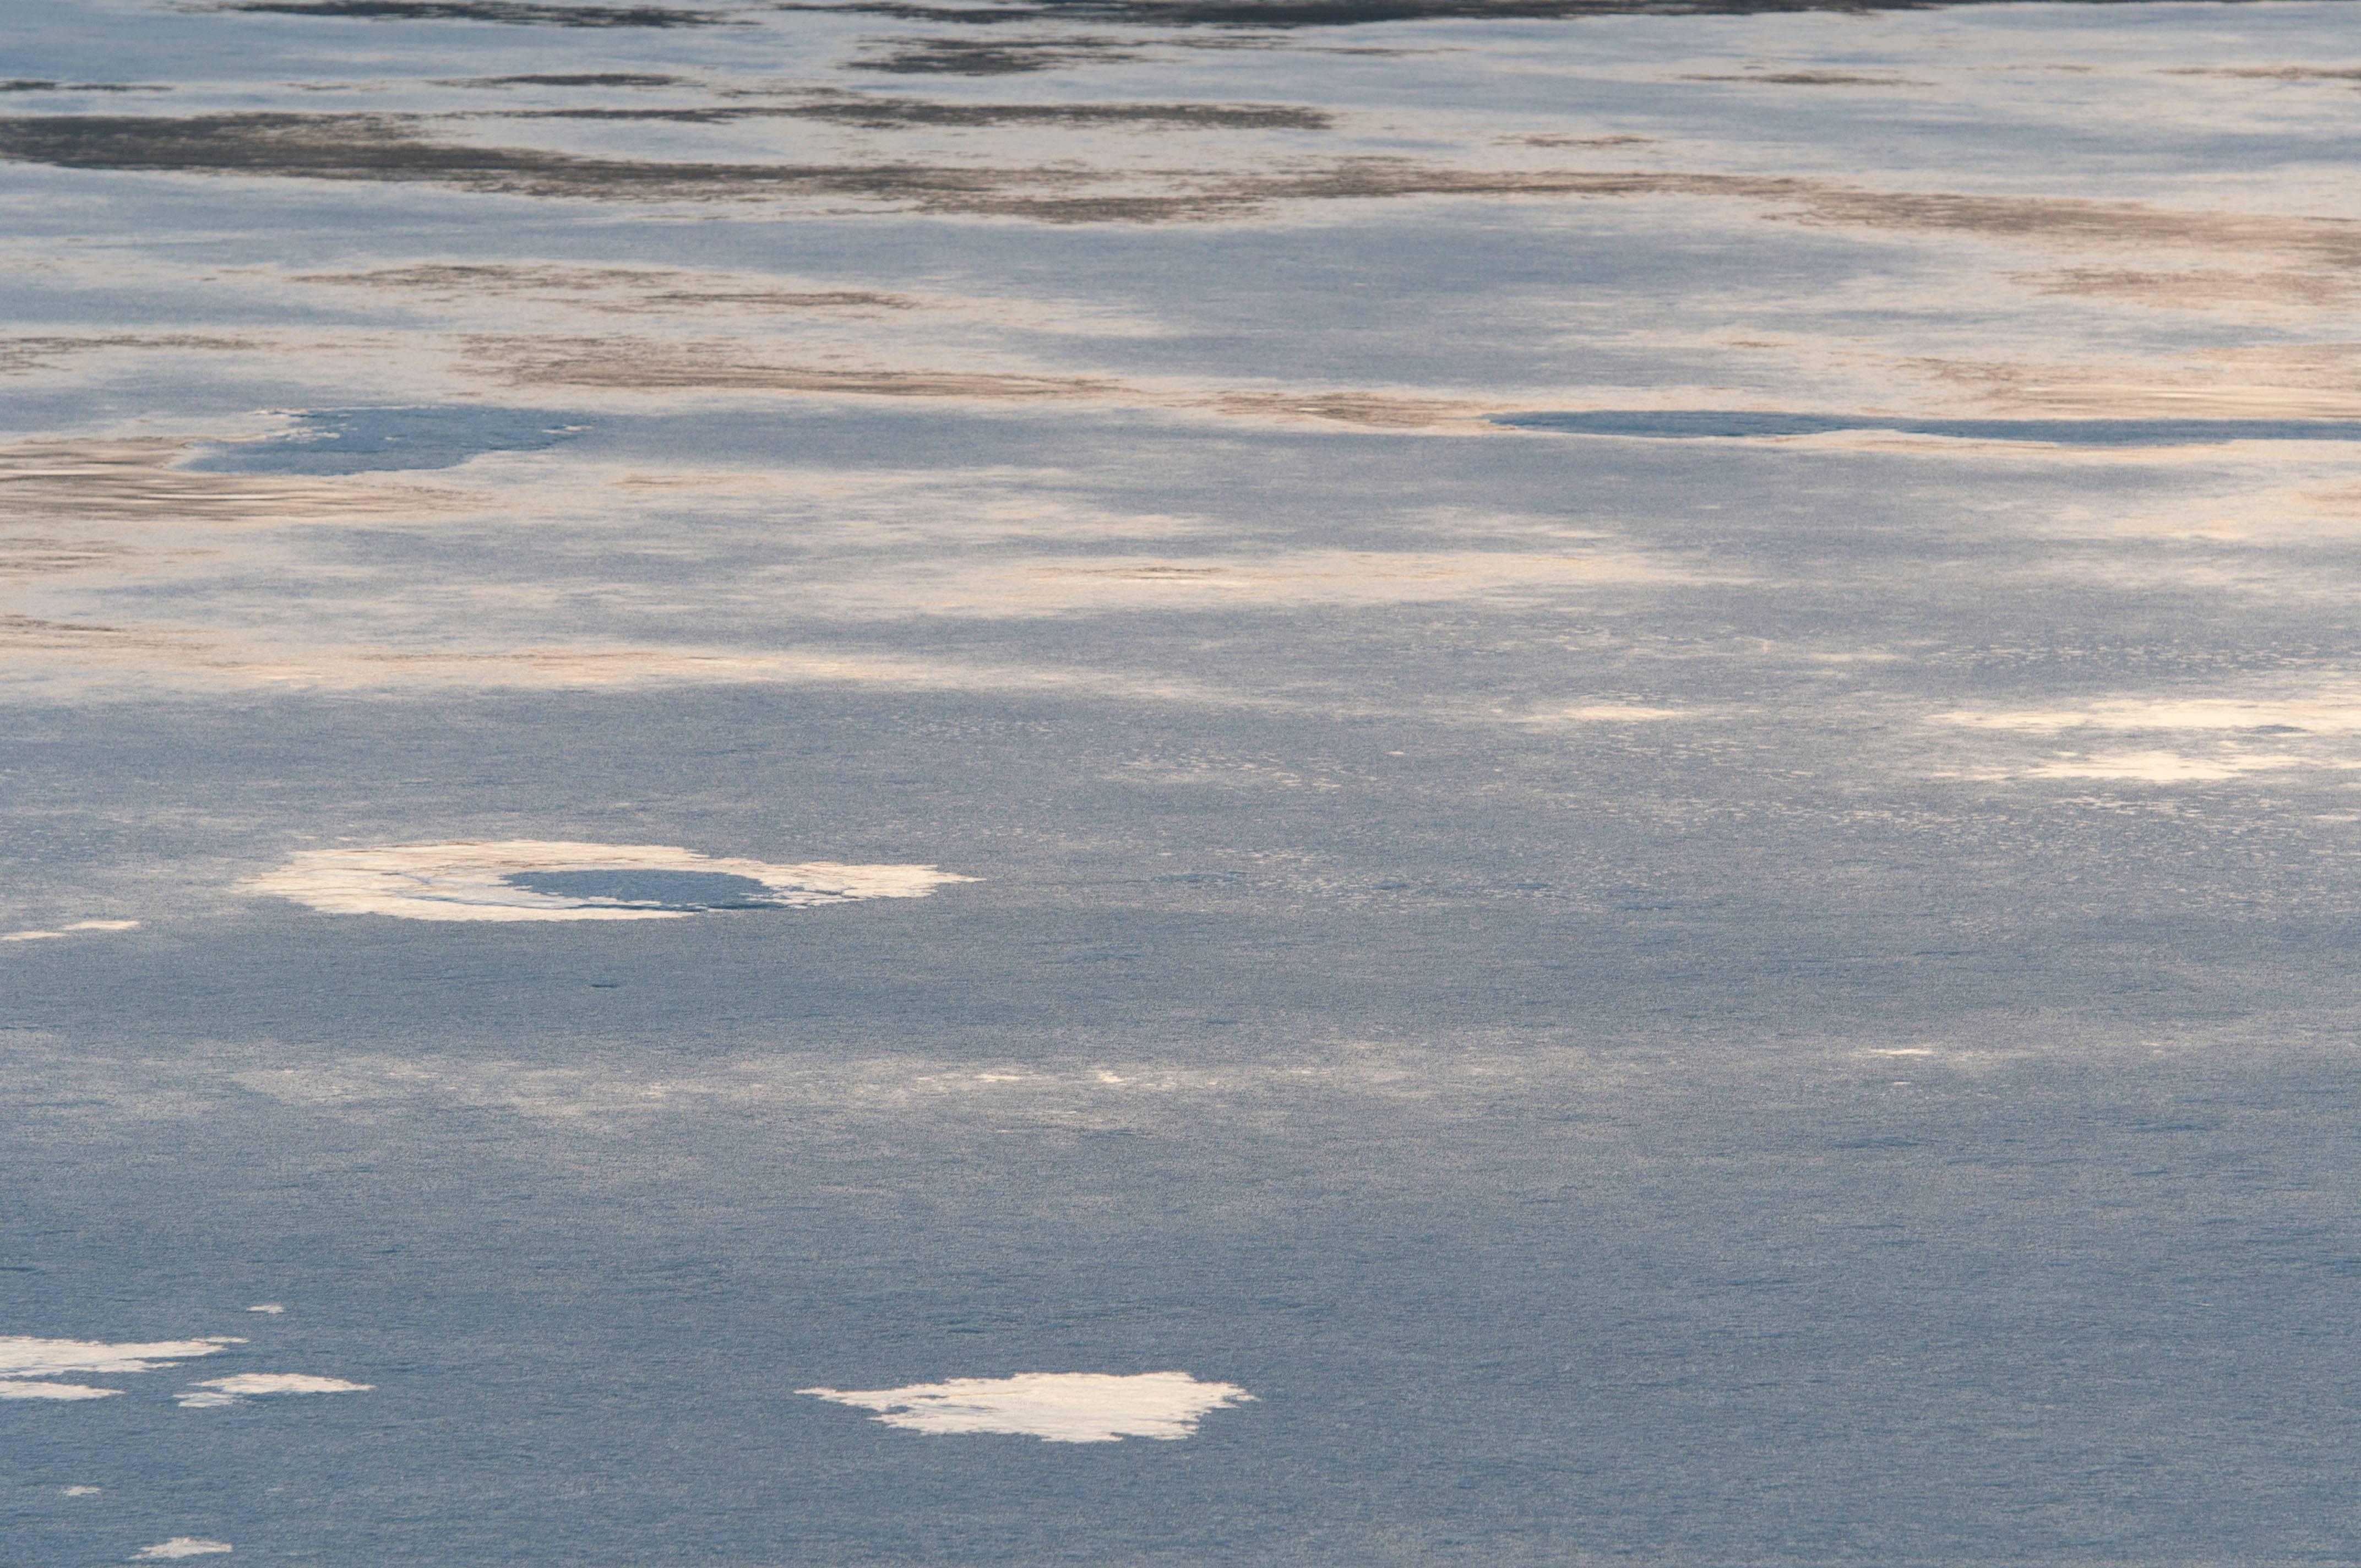 Gaétan Caron Landscape Photograph - "Le Dégel" (Thawing), Ice Melting on Lake, Abstract (Framed)